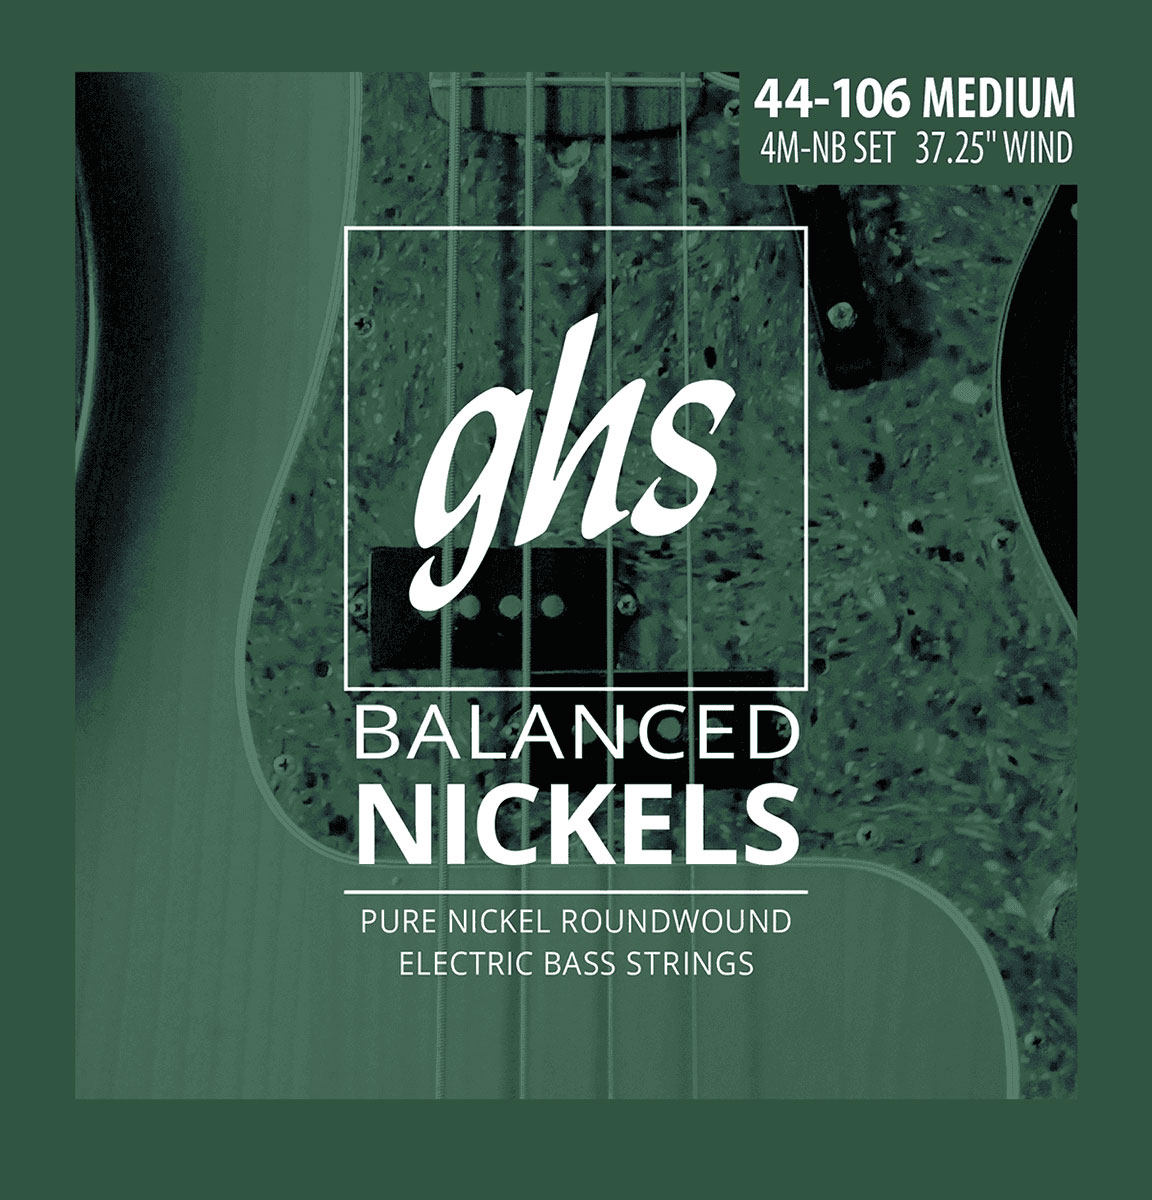 GHS 4M-NB BALANCED NICKELS MEDIUM 44-106